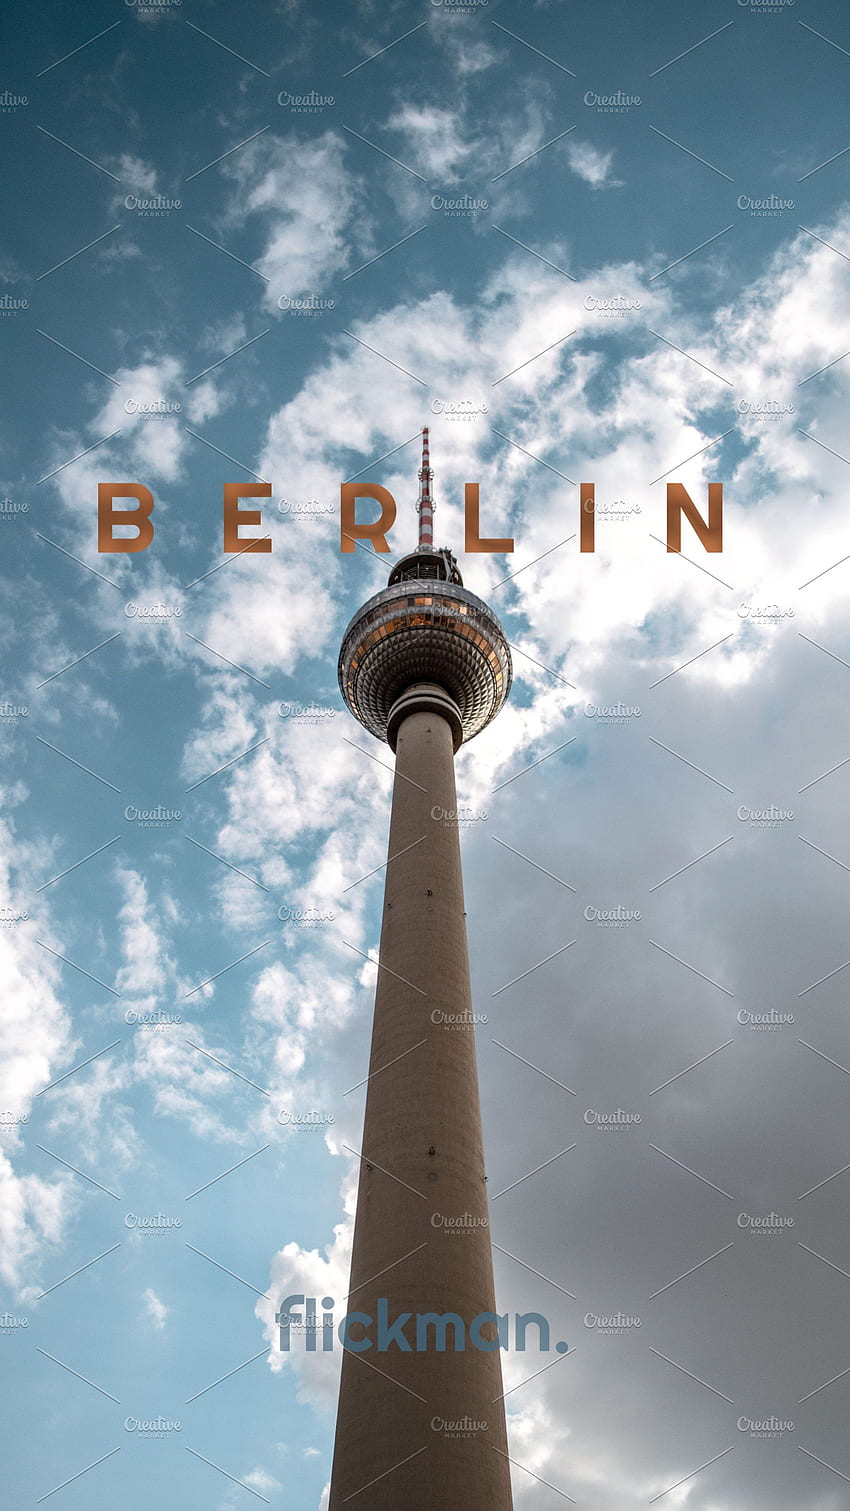 Berlin, Jerman iPhone wallpaper ponsel HD